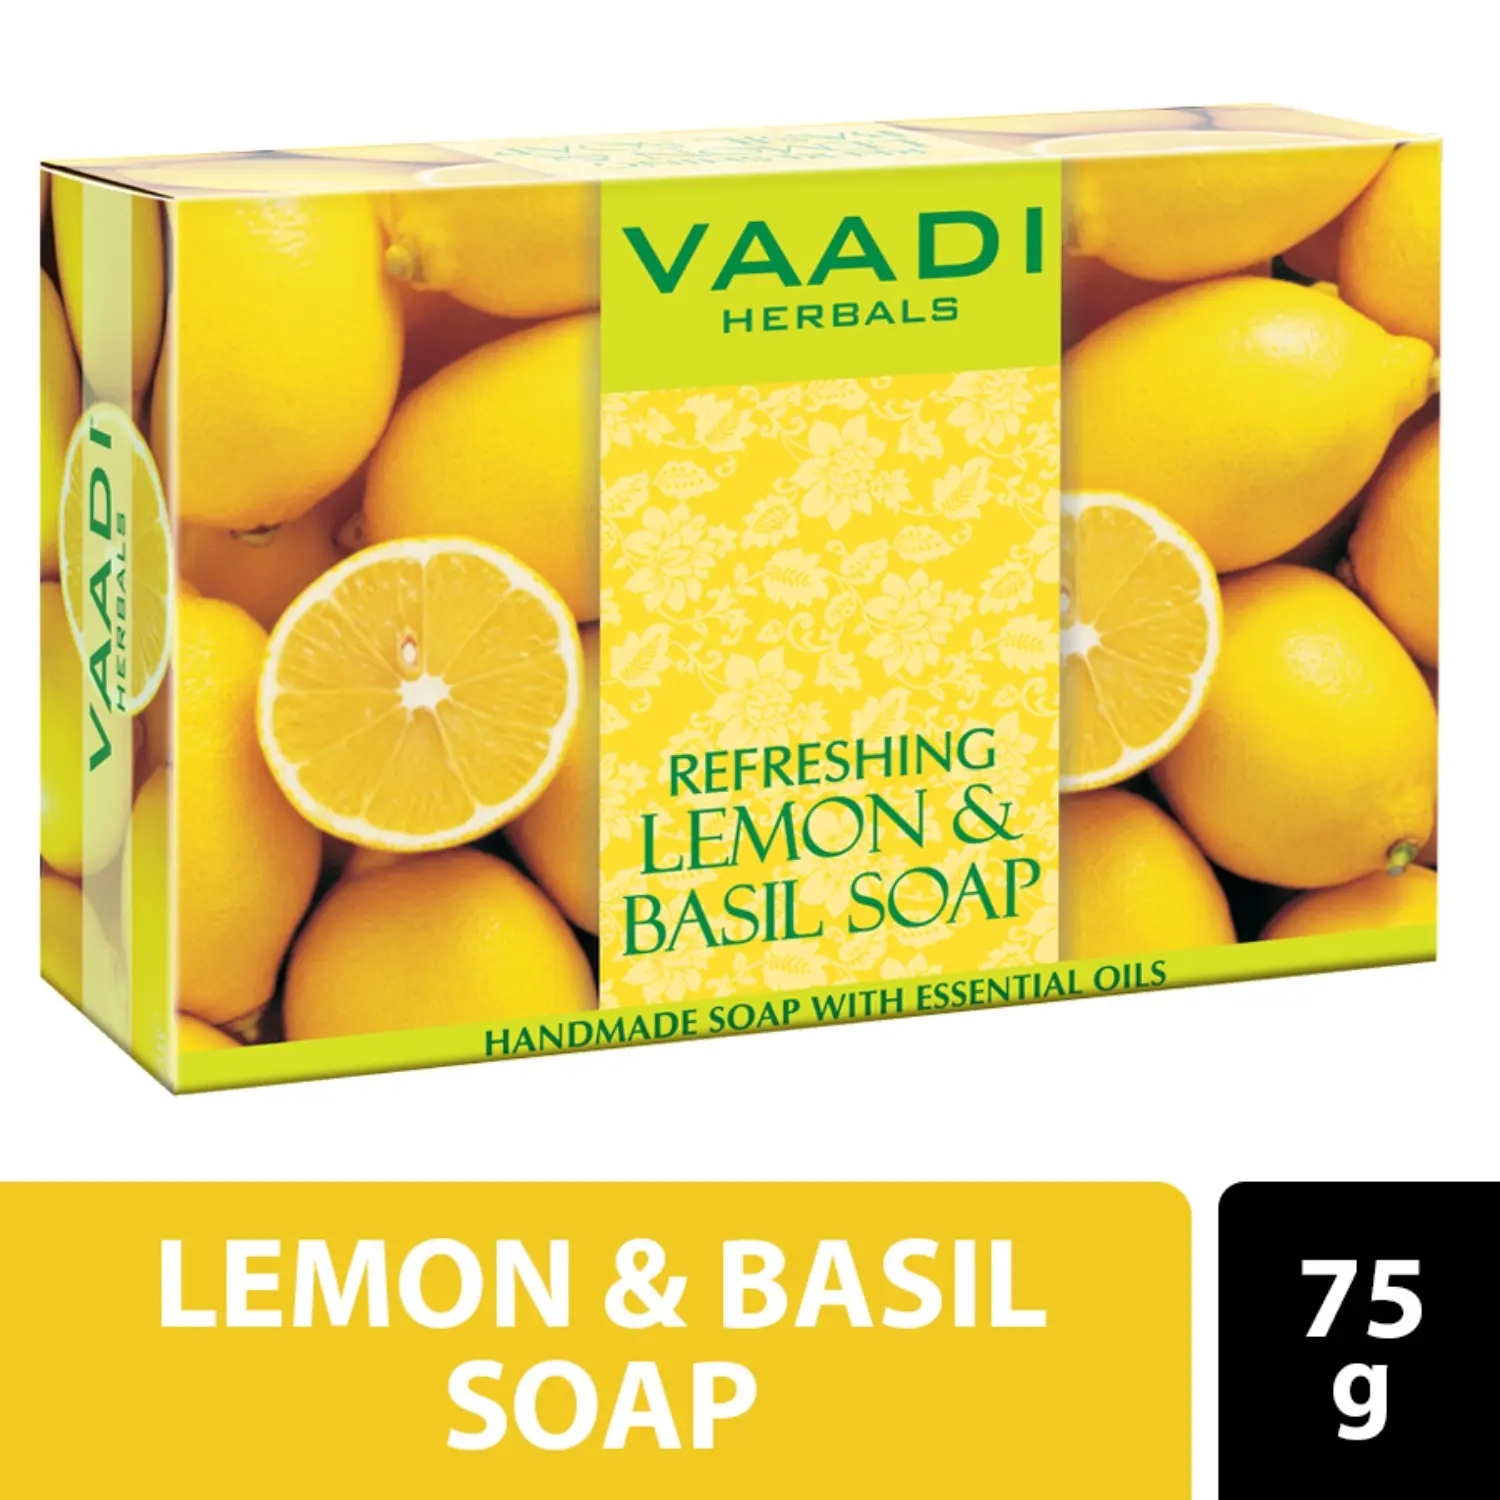 Vaadi Herbals | Vaadi Herbals Refreshing Lemon & Basil Handmade Soap (75g)